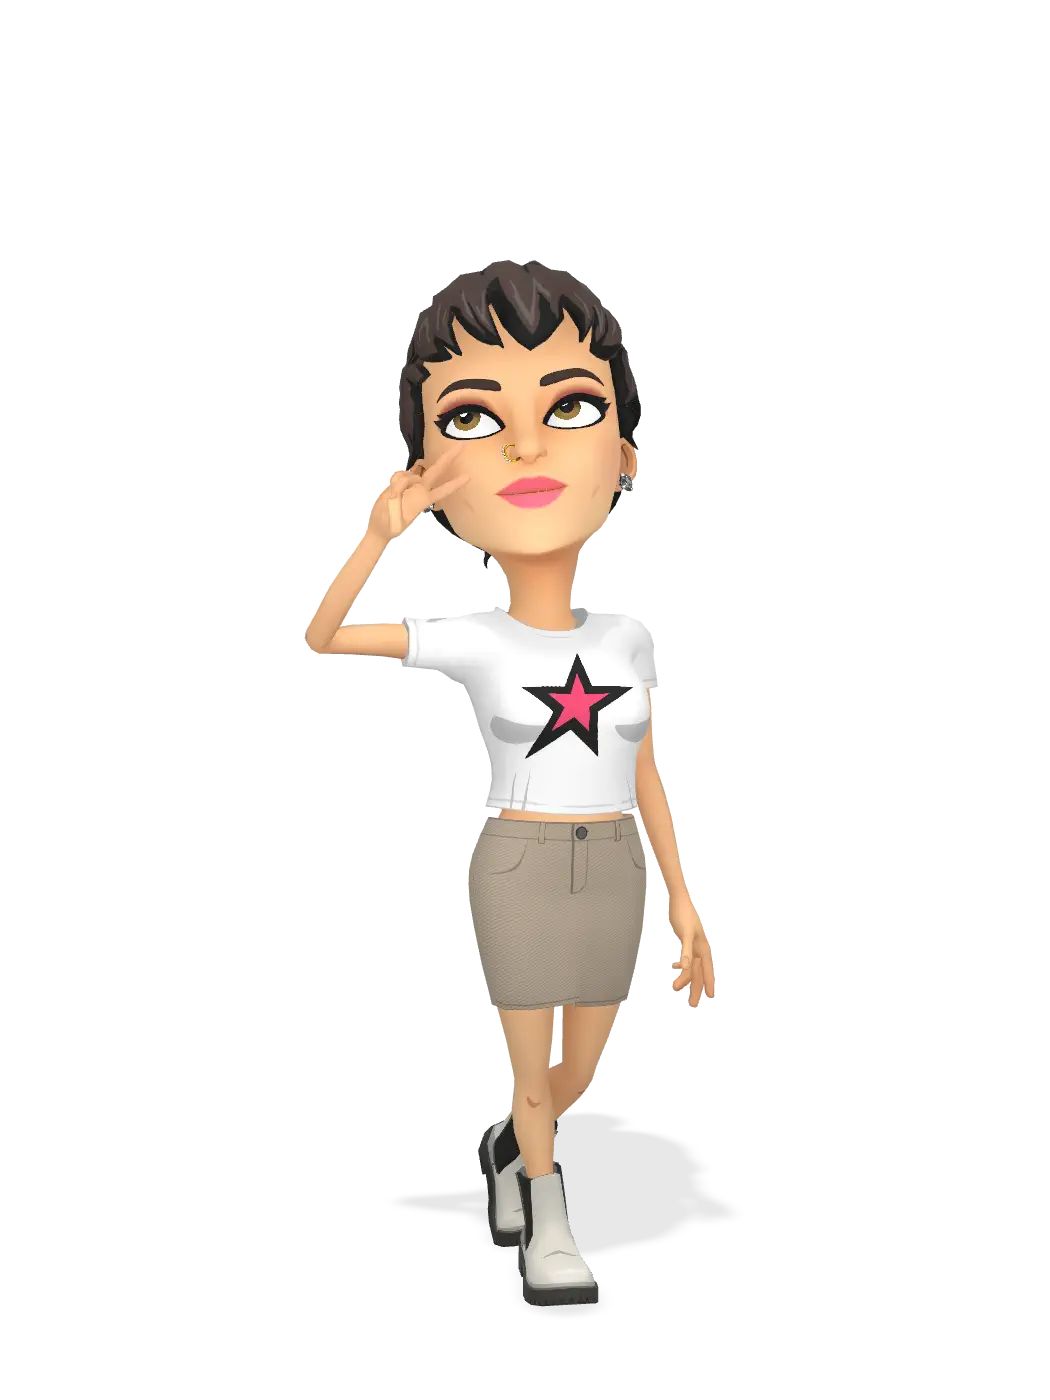 3D Bitmoji for tooto94 avatar